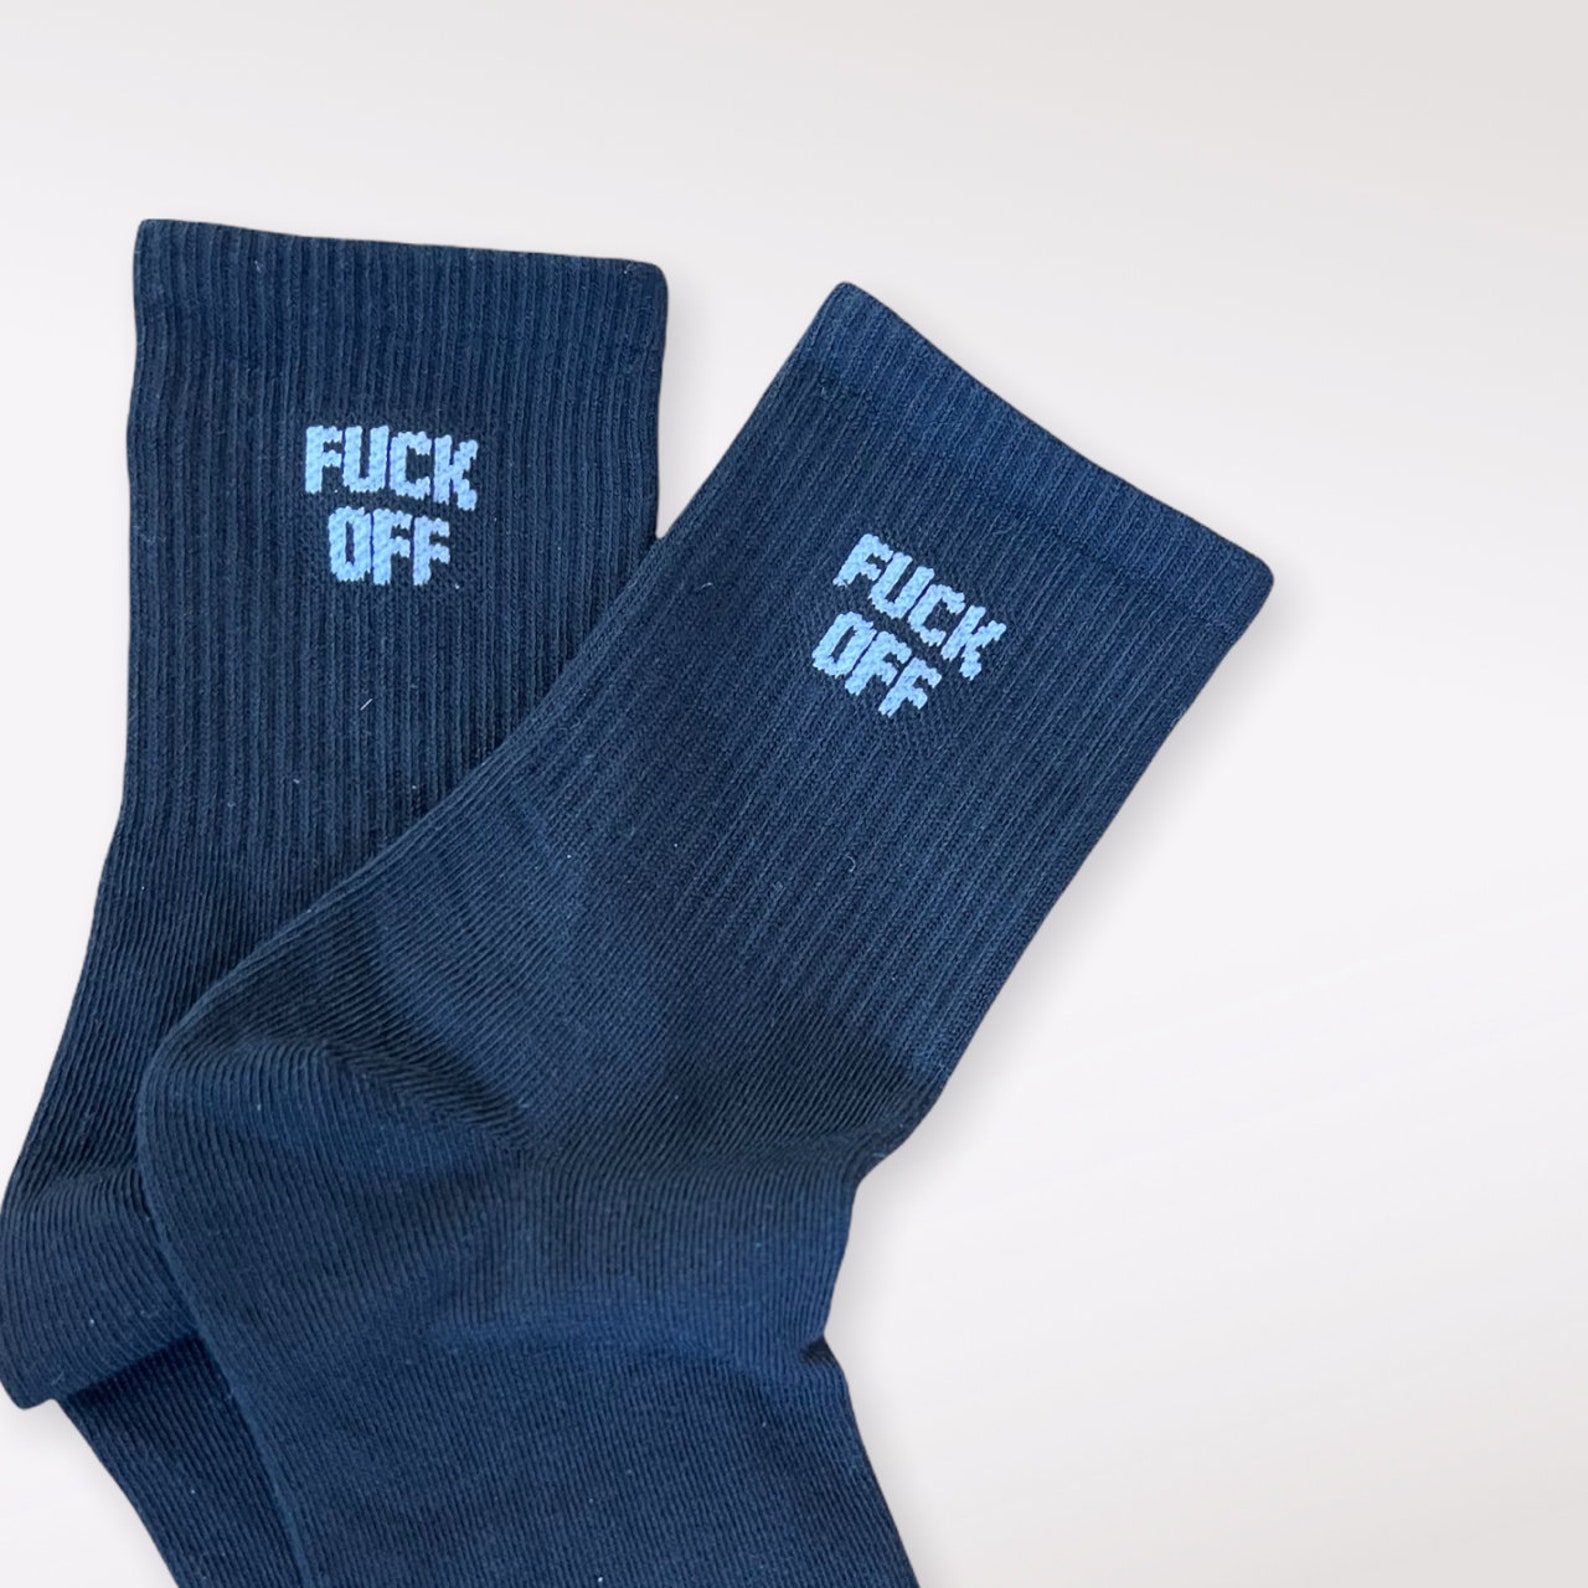 Fuck off Socks Funny Socks Say It Socks Women Socks - Etsy